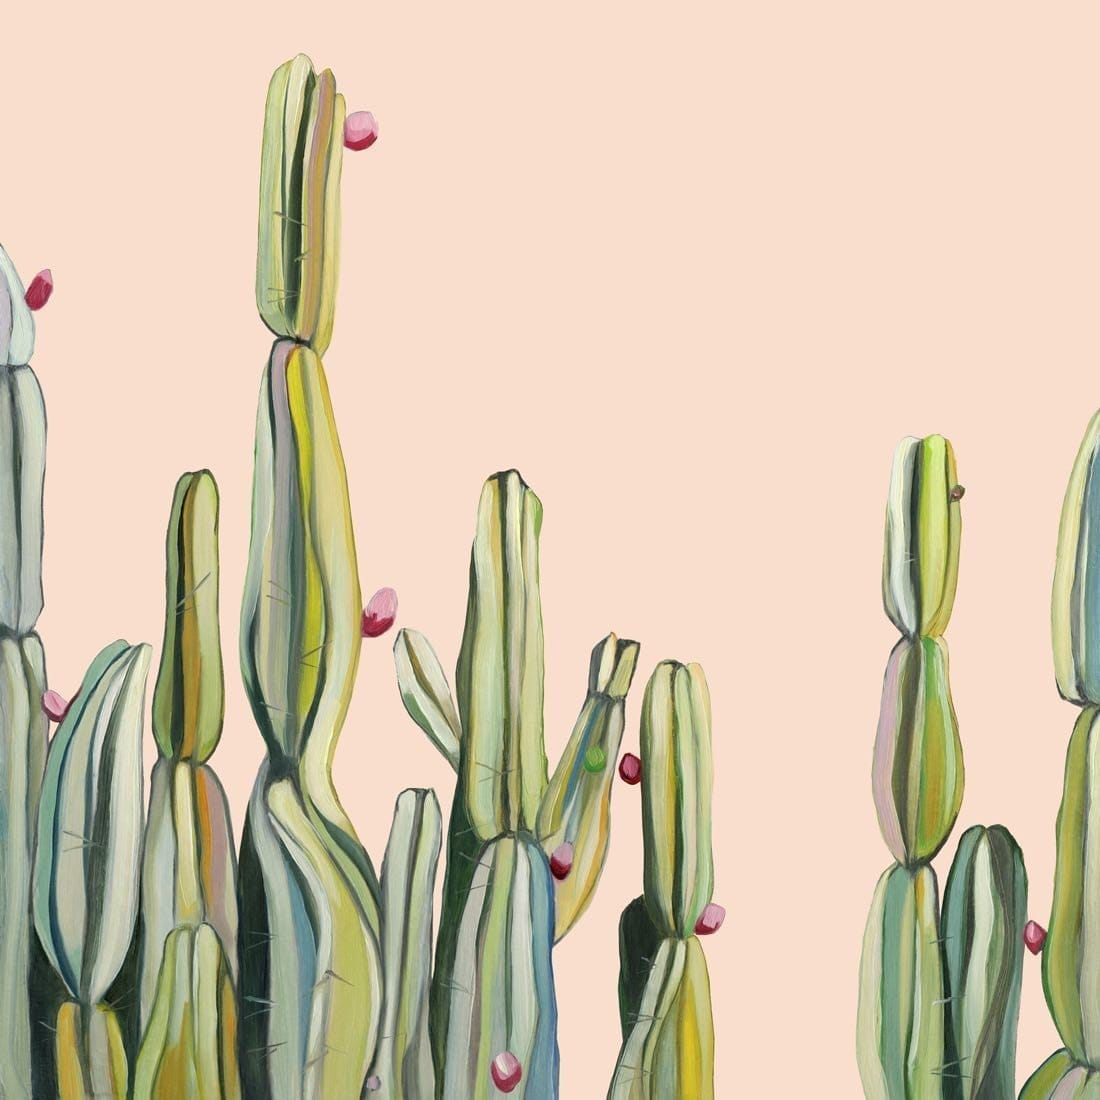 Kimberley Cactus - Print-Prints-Kate Jarman-Greenhouse Interiors